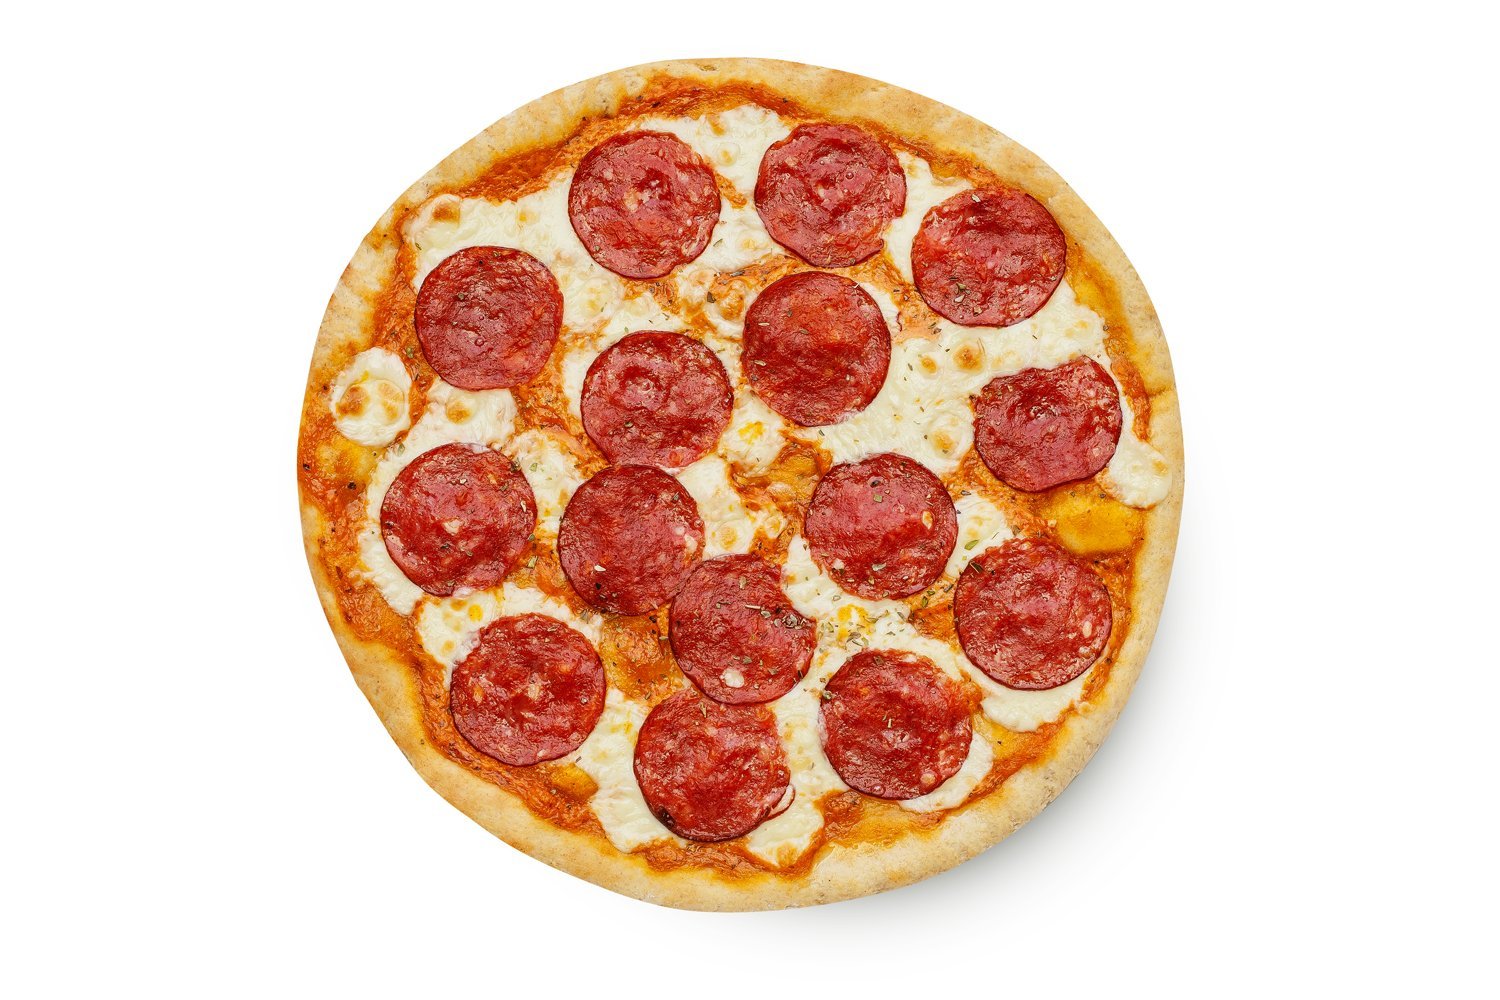 что означает пепперони в пицце фото 54